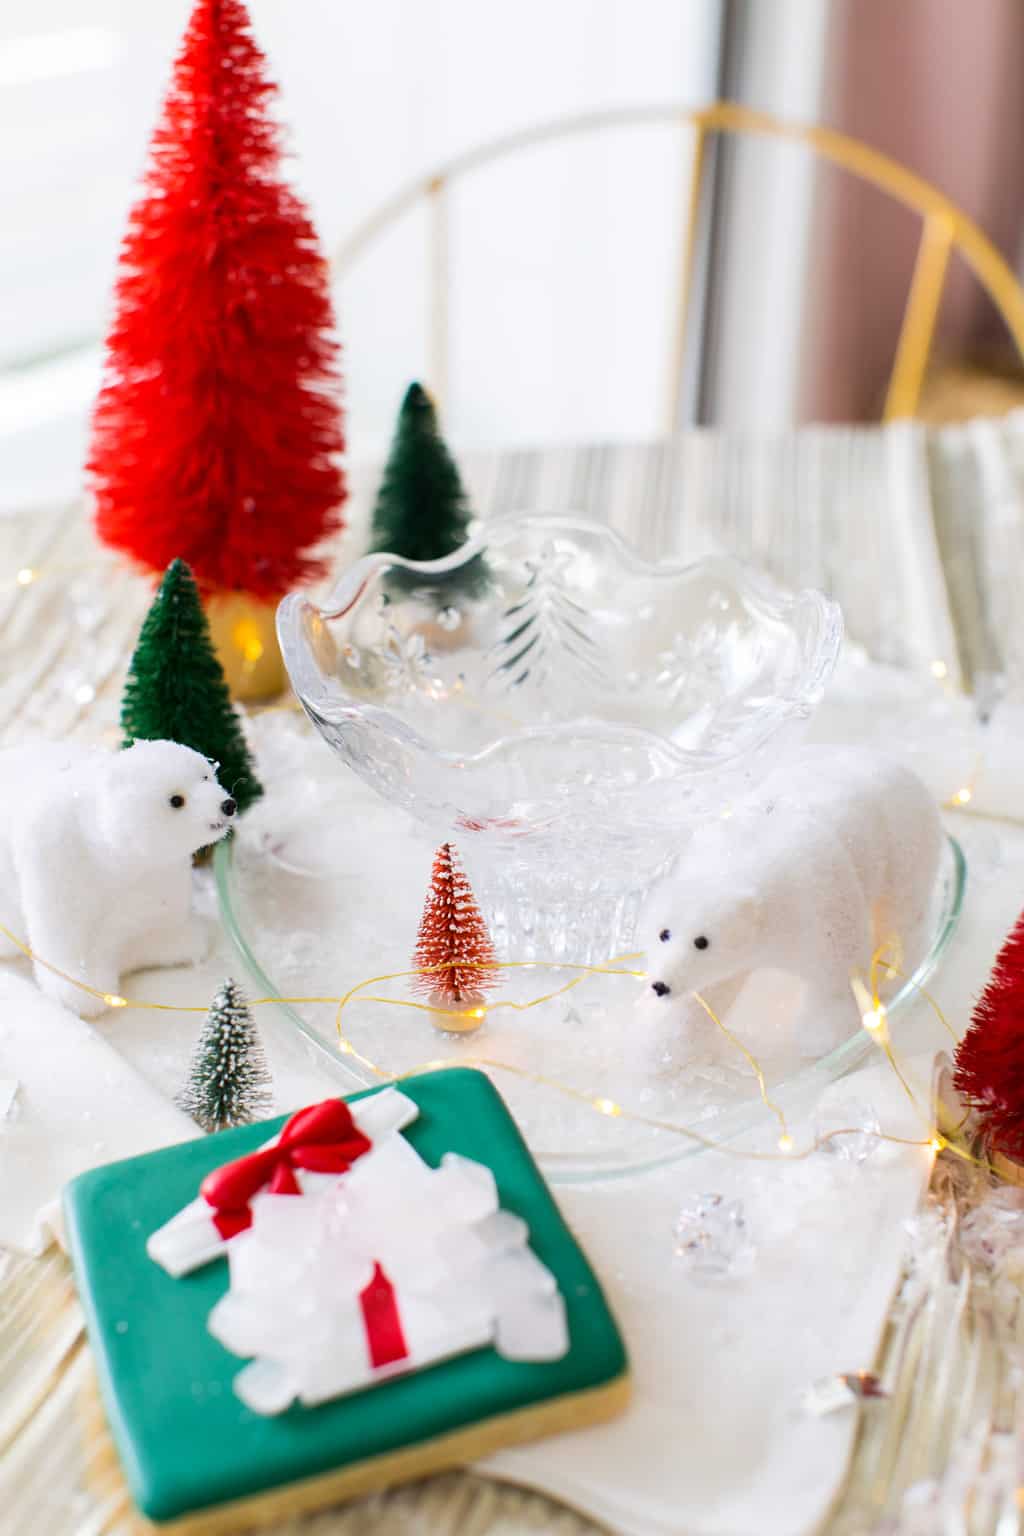 Winter Wonderland - a North Pole inspired entertaining decor by Ashley Rose of Sugar & Cloth